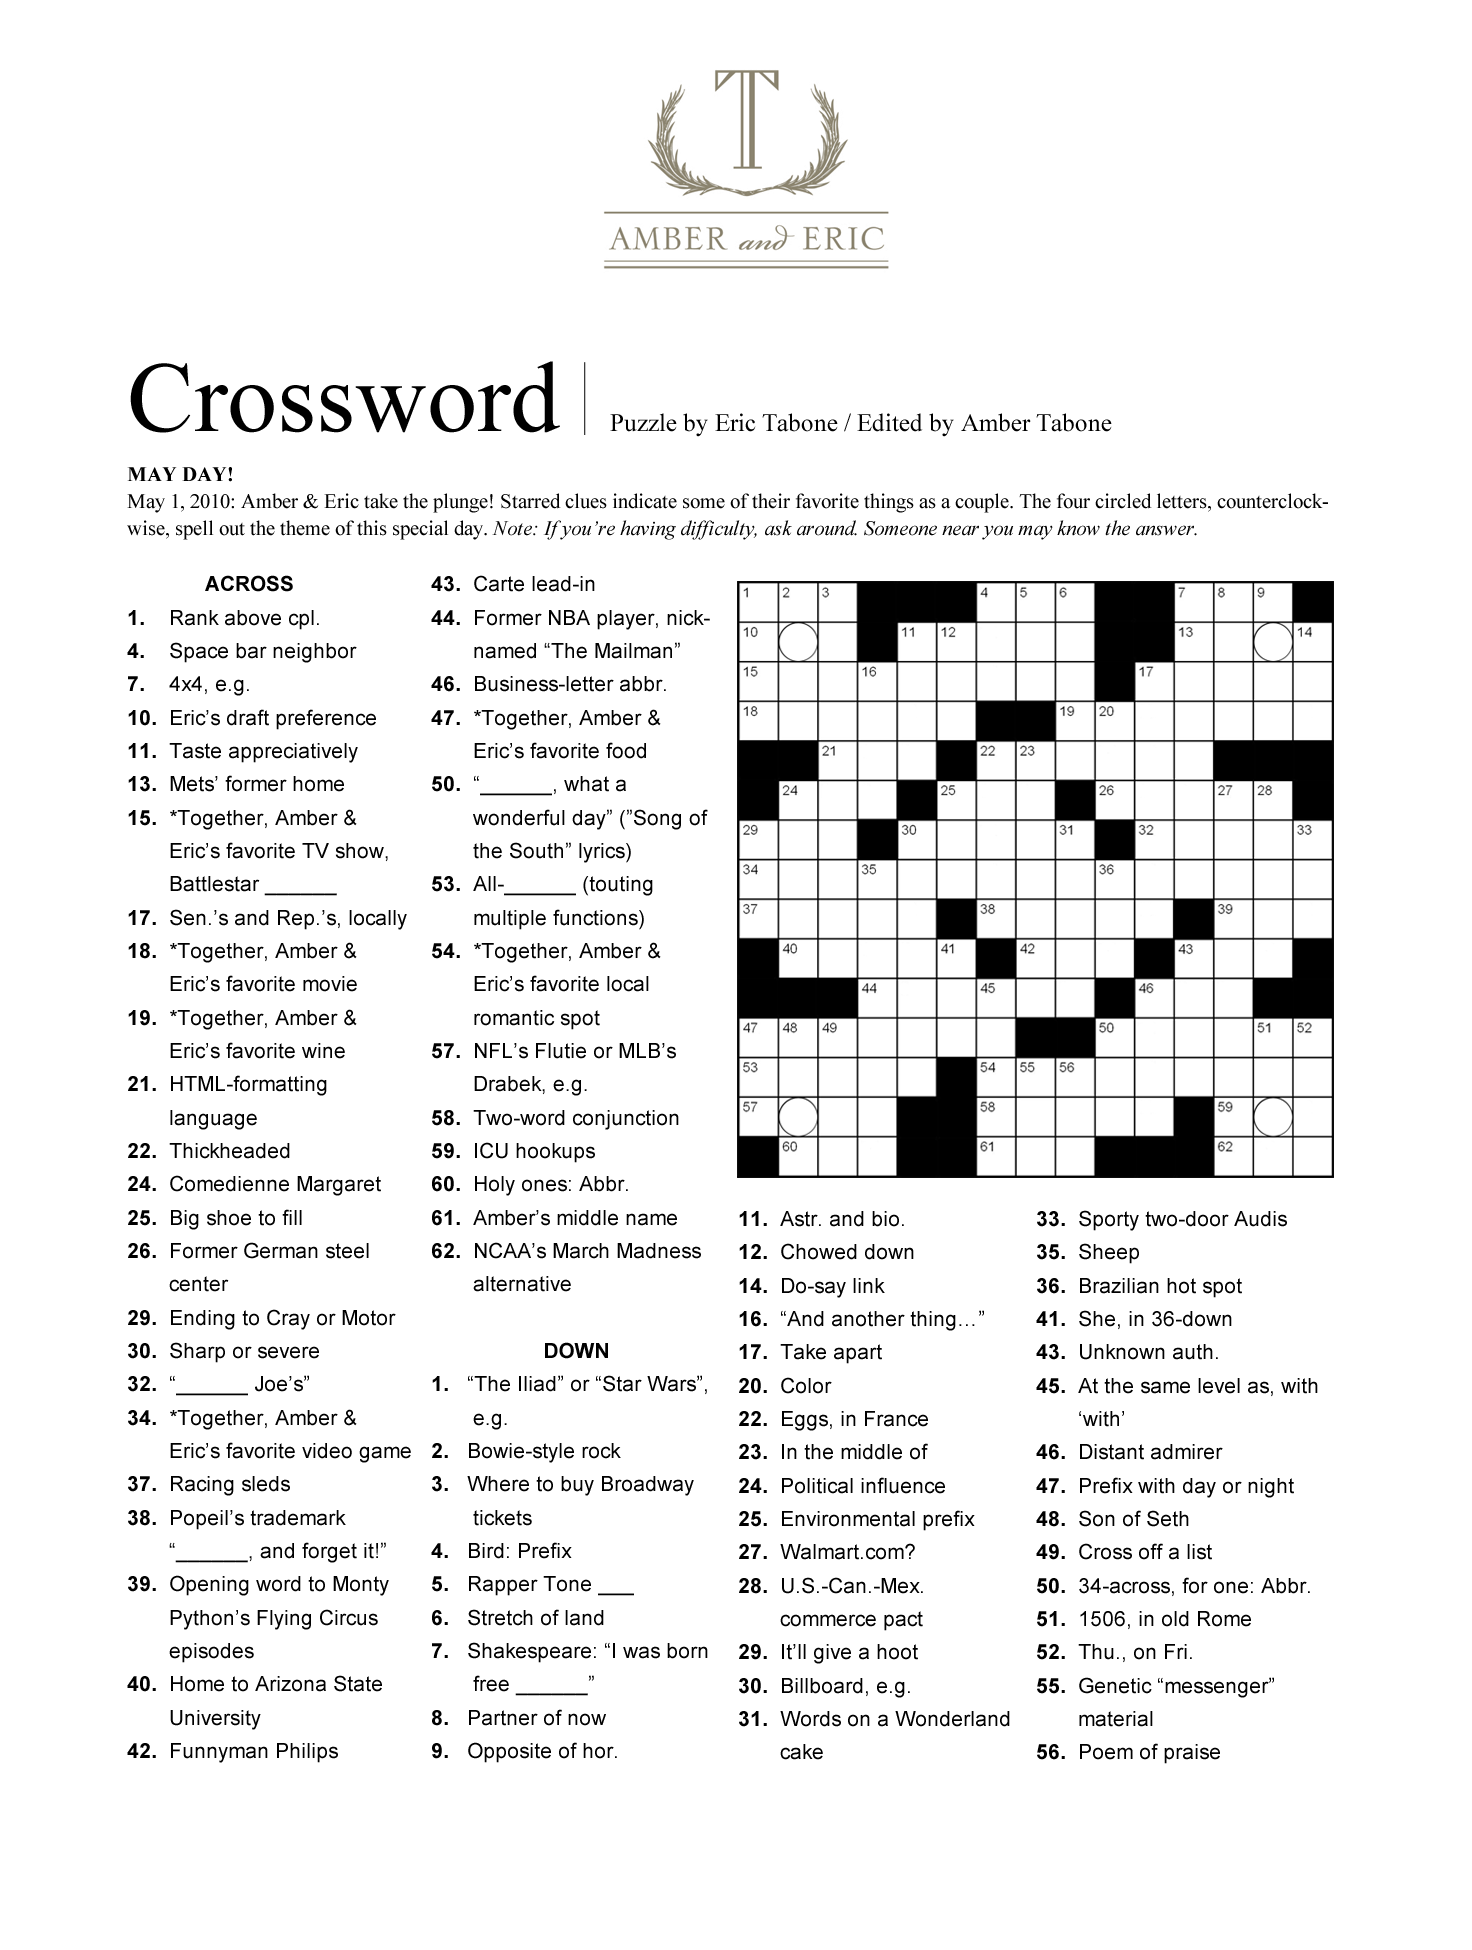 http://www.erictabone.com/2010/05/11/crossword_raw.png